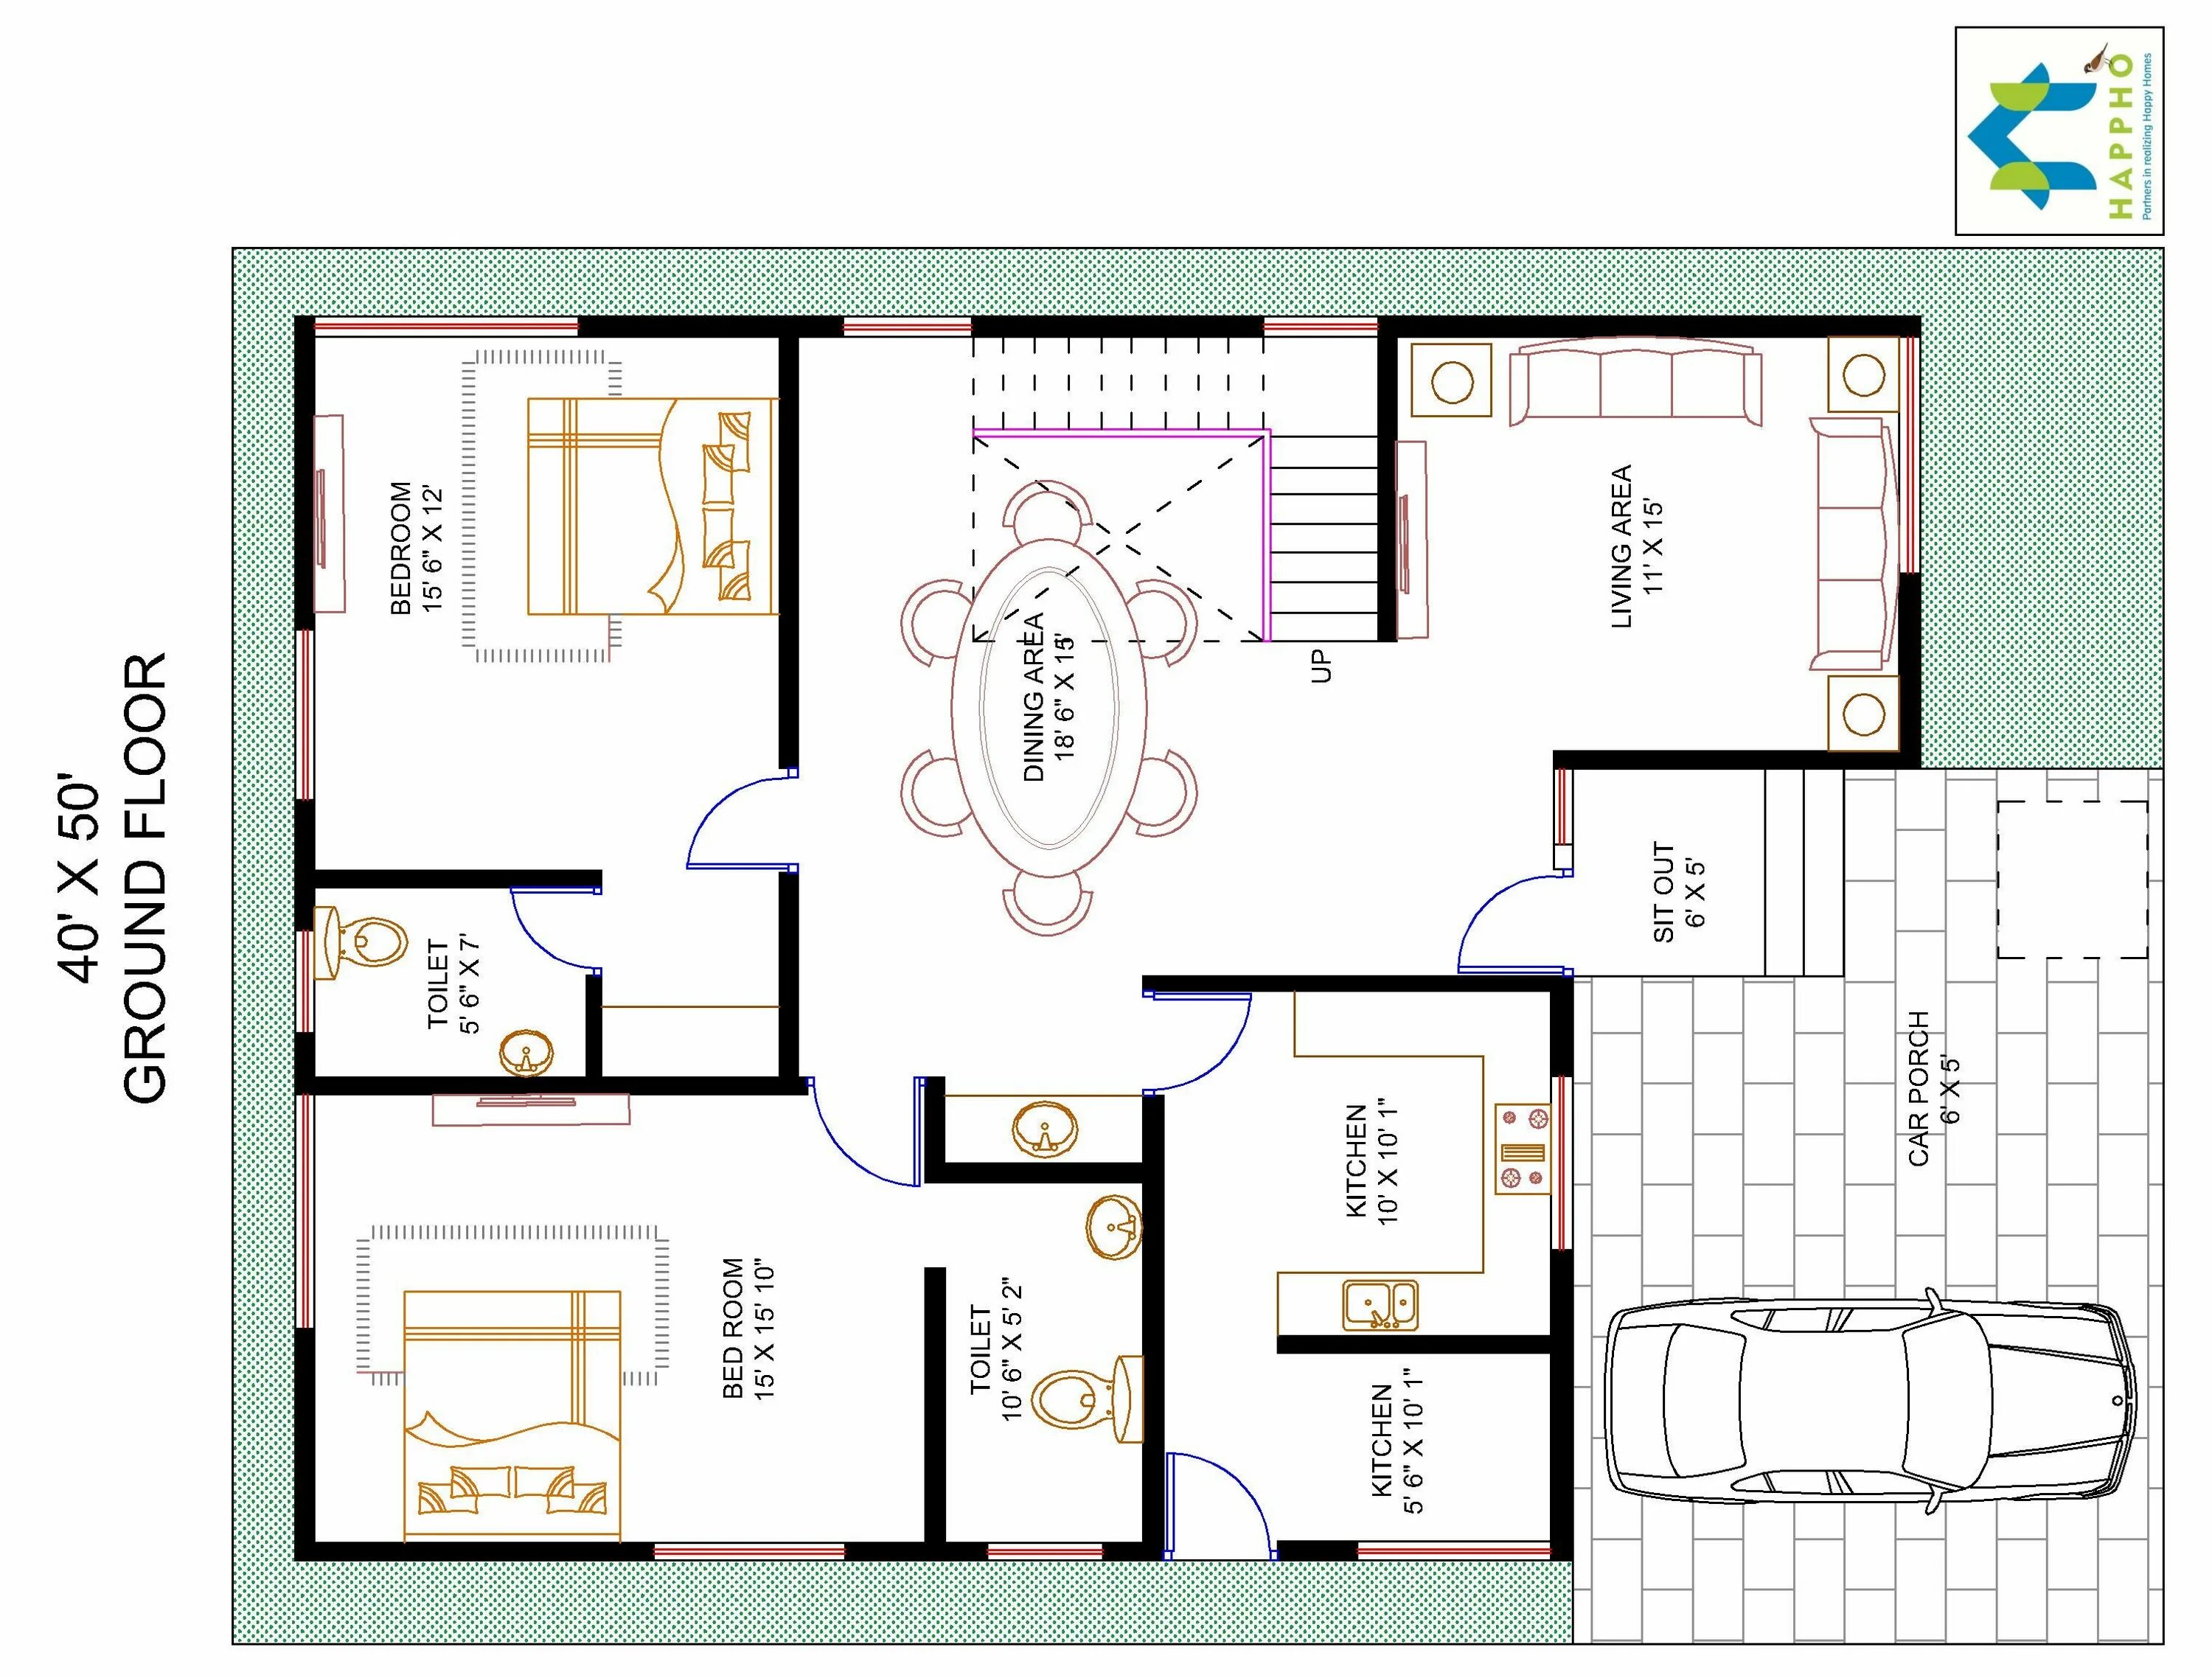 Duplex House Floor Plan. Small House Duplex Plans. Modern Duplex House Floor Plan. Plan 50